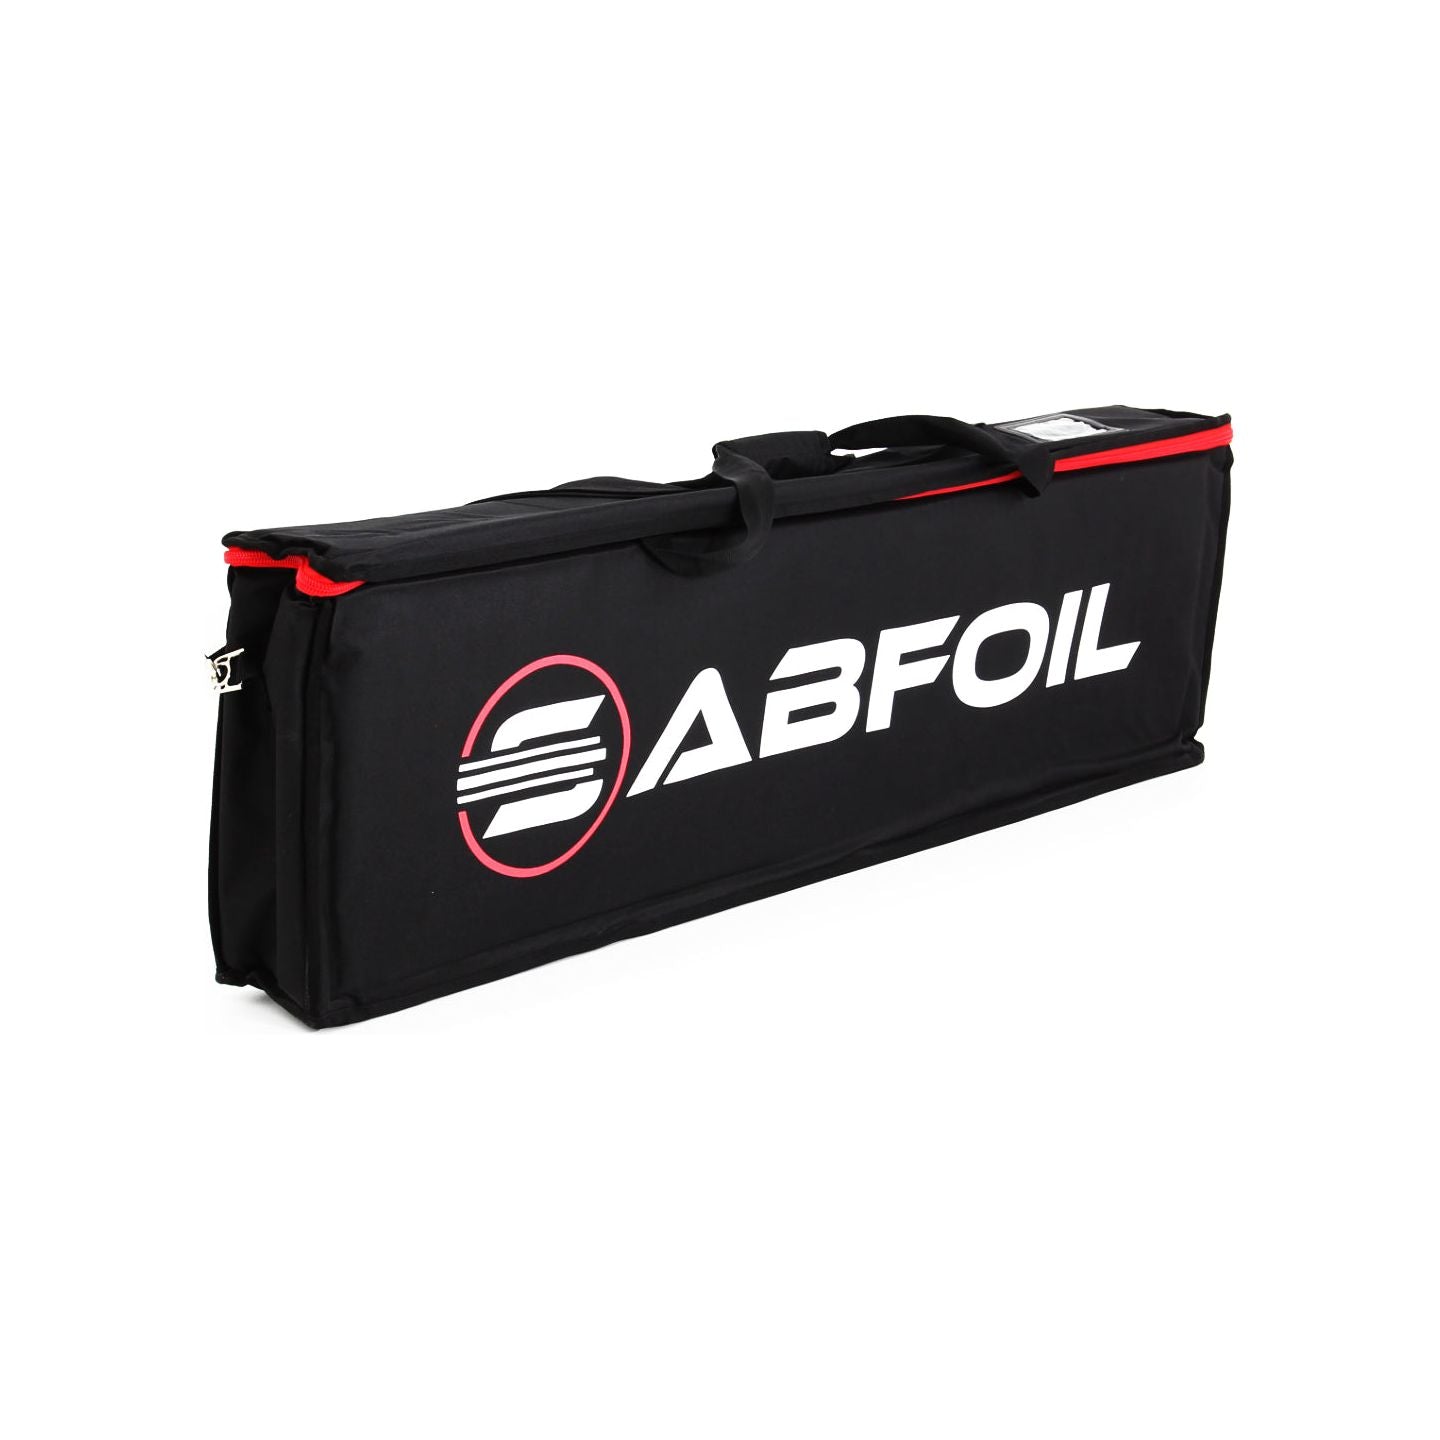 Sabfoil Razor Pro 825/86P | Hydrofoil Set